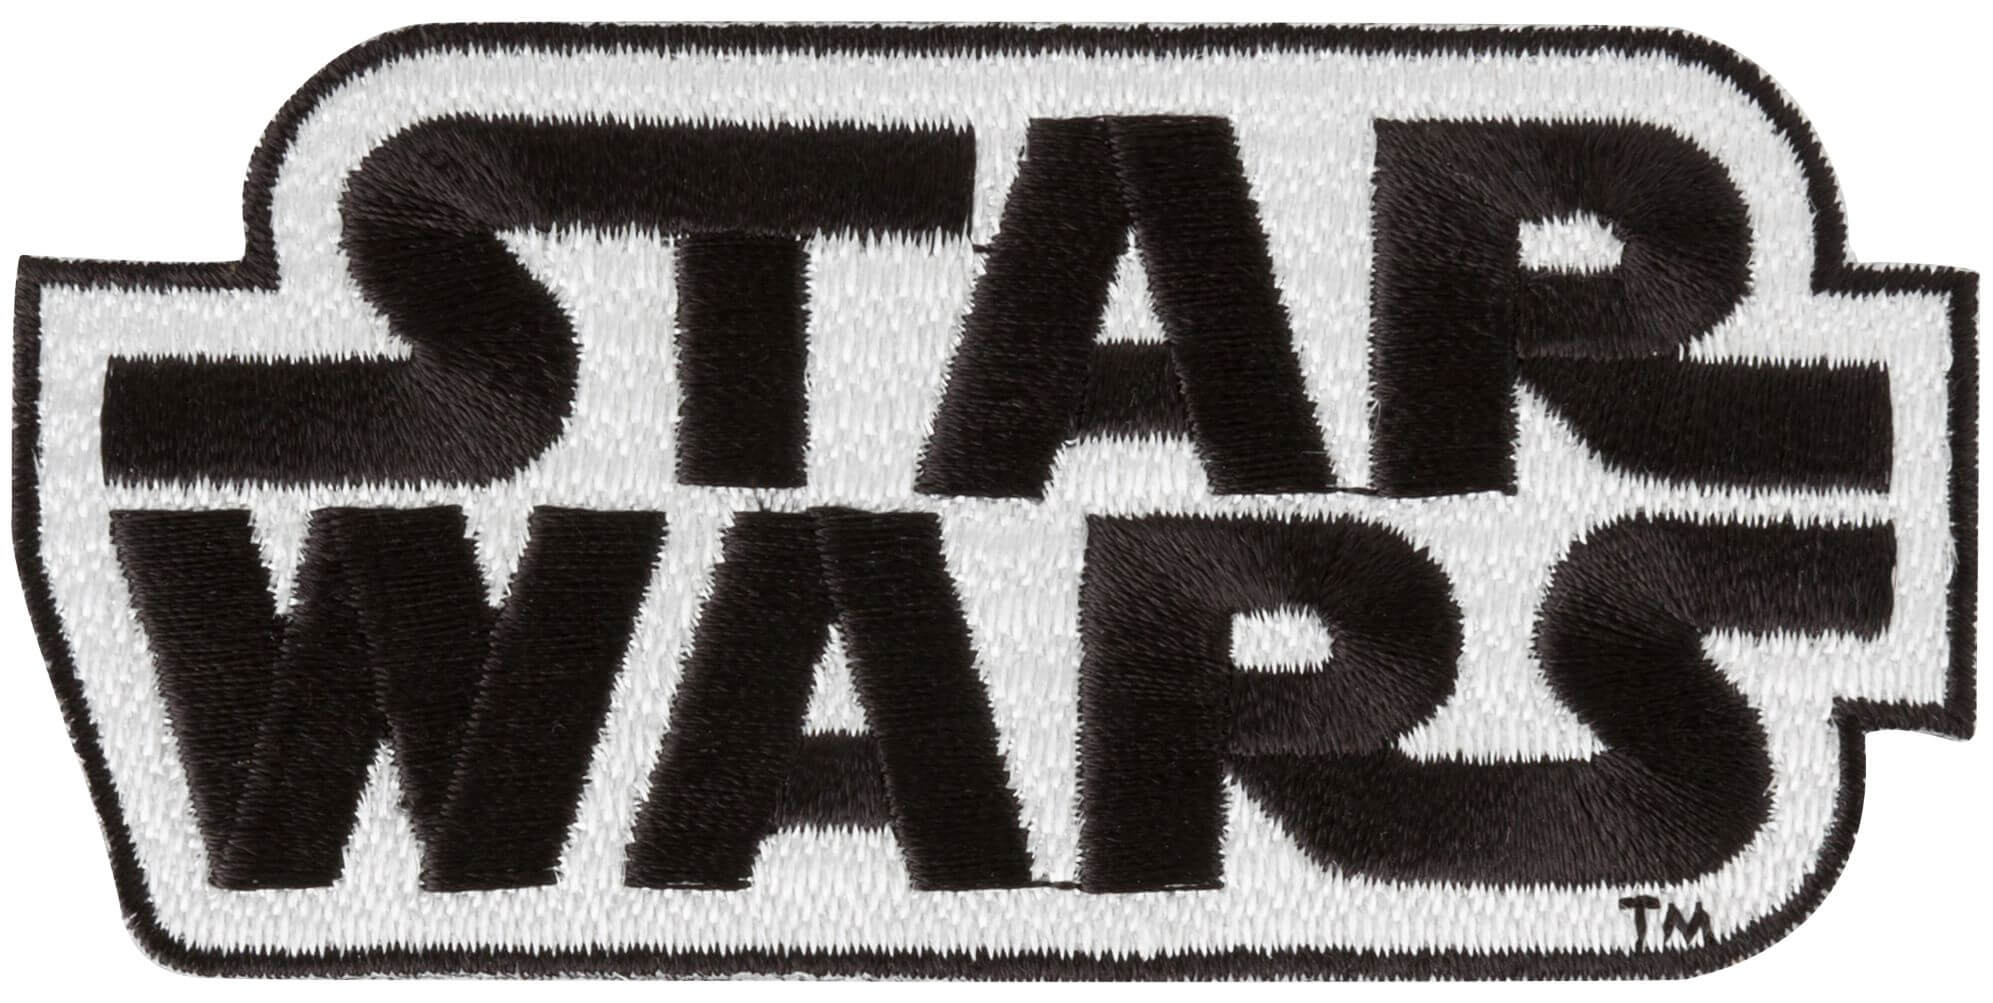 STAR WARS LOGO - Sewdirect